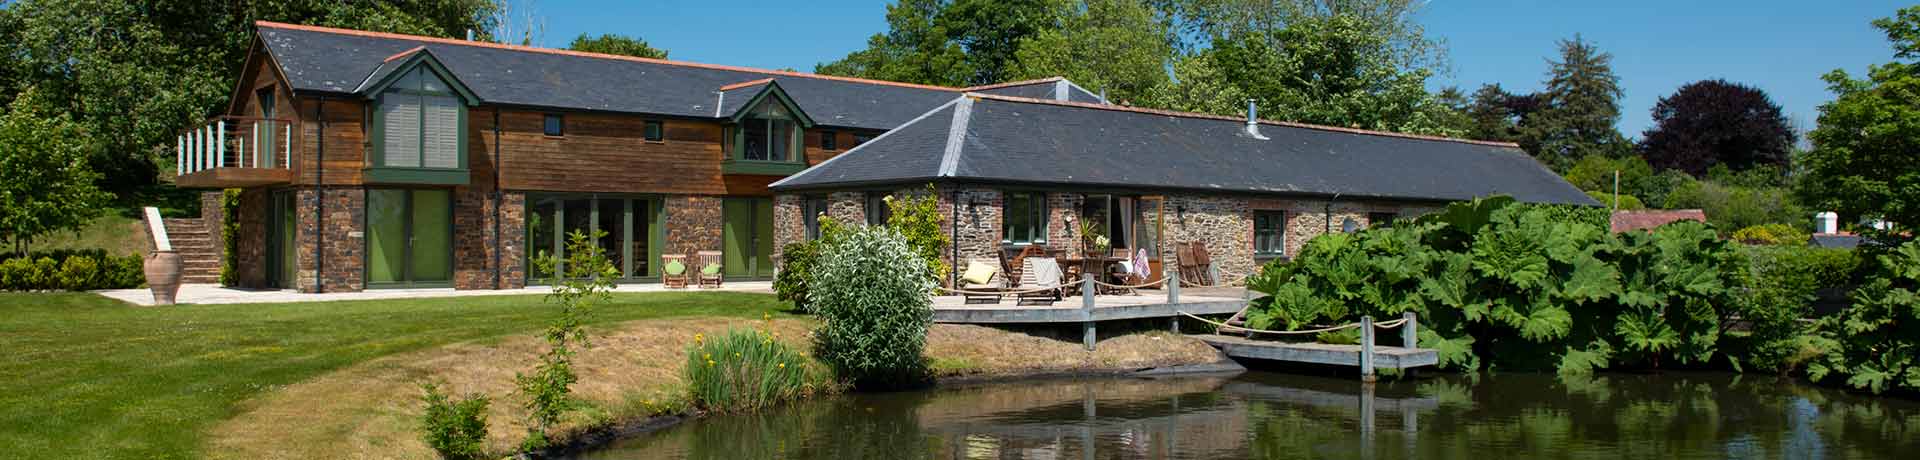 Group Cottages for 16 in Devon